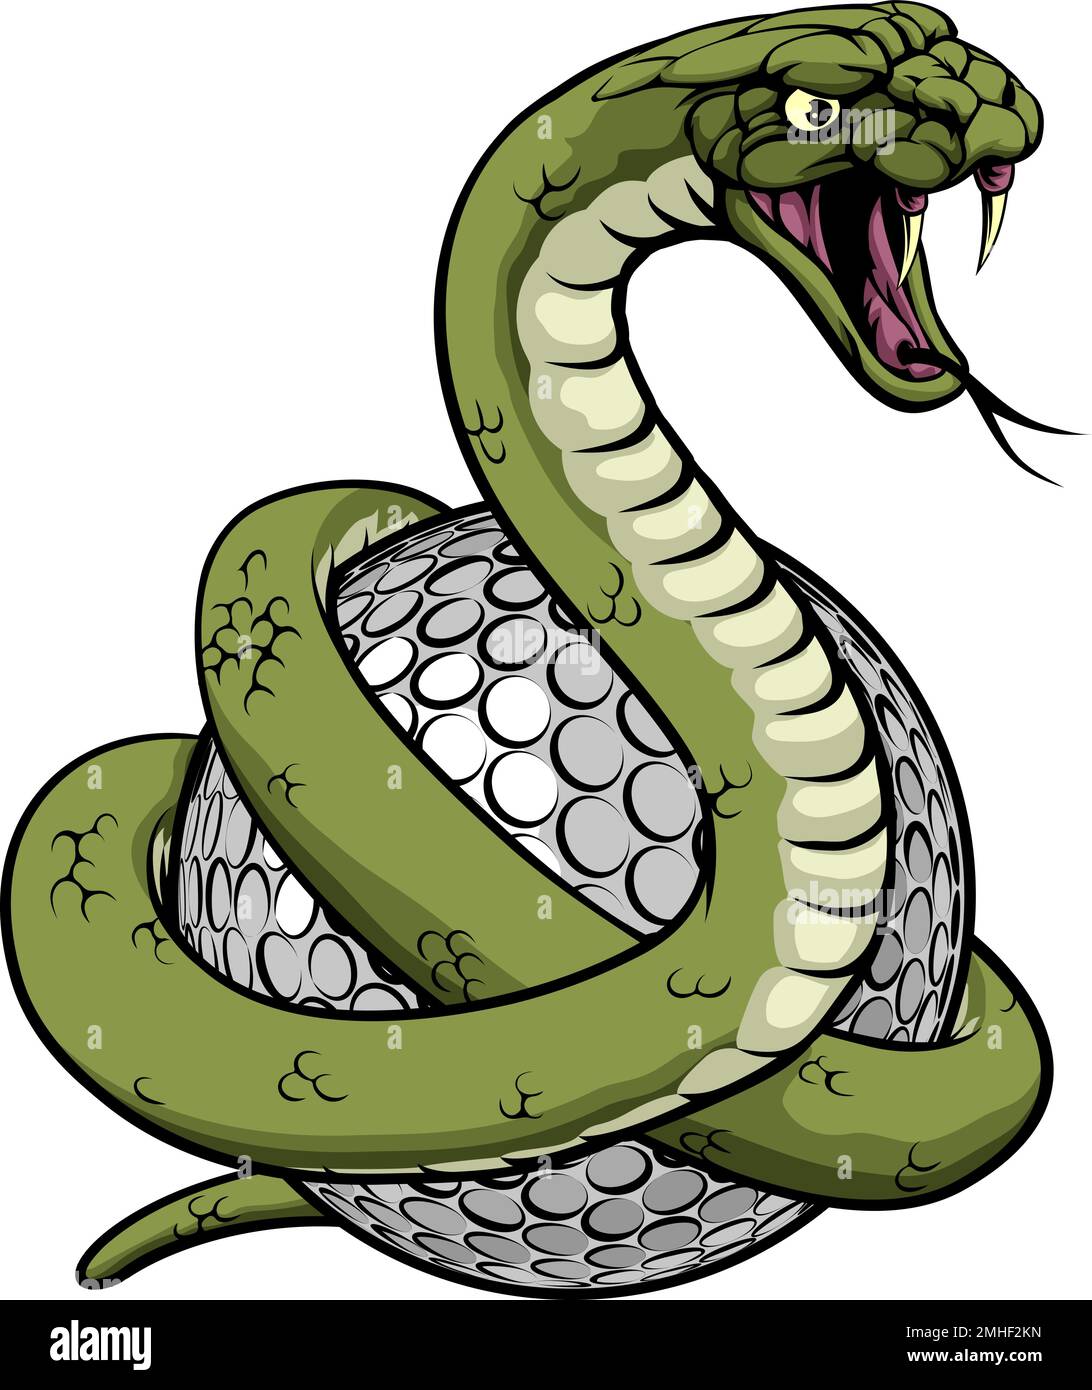 Snake Golf Ball Animal Sports Team Cartoon Mascot Illustrazione Vettoriale